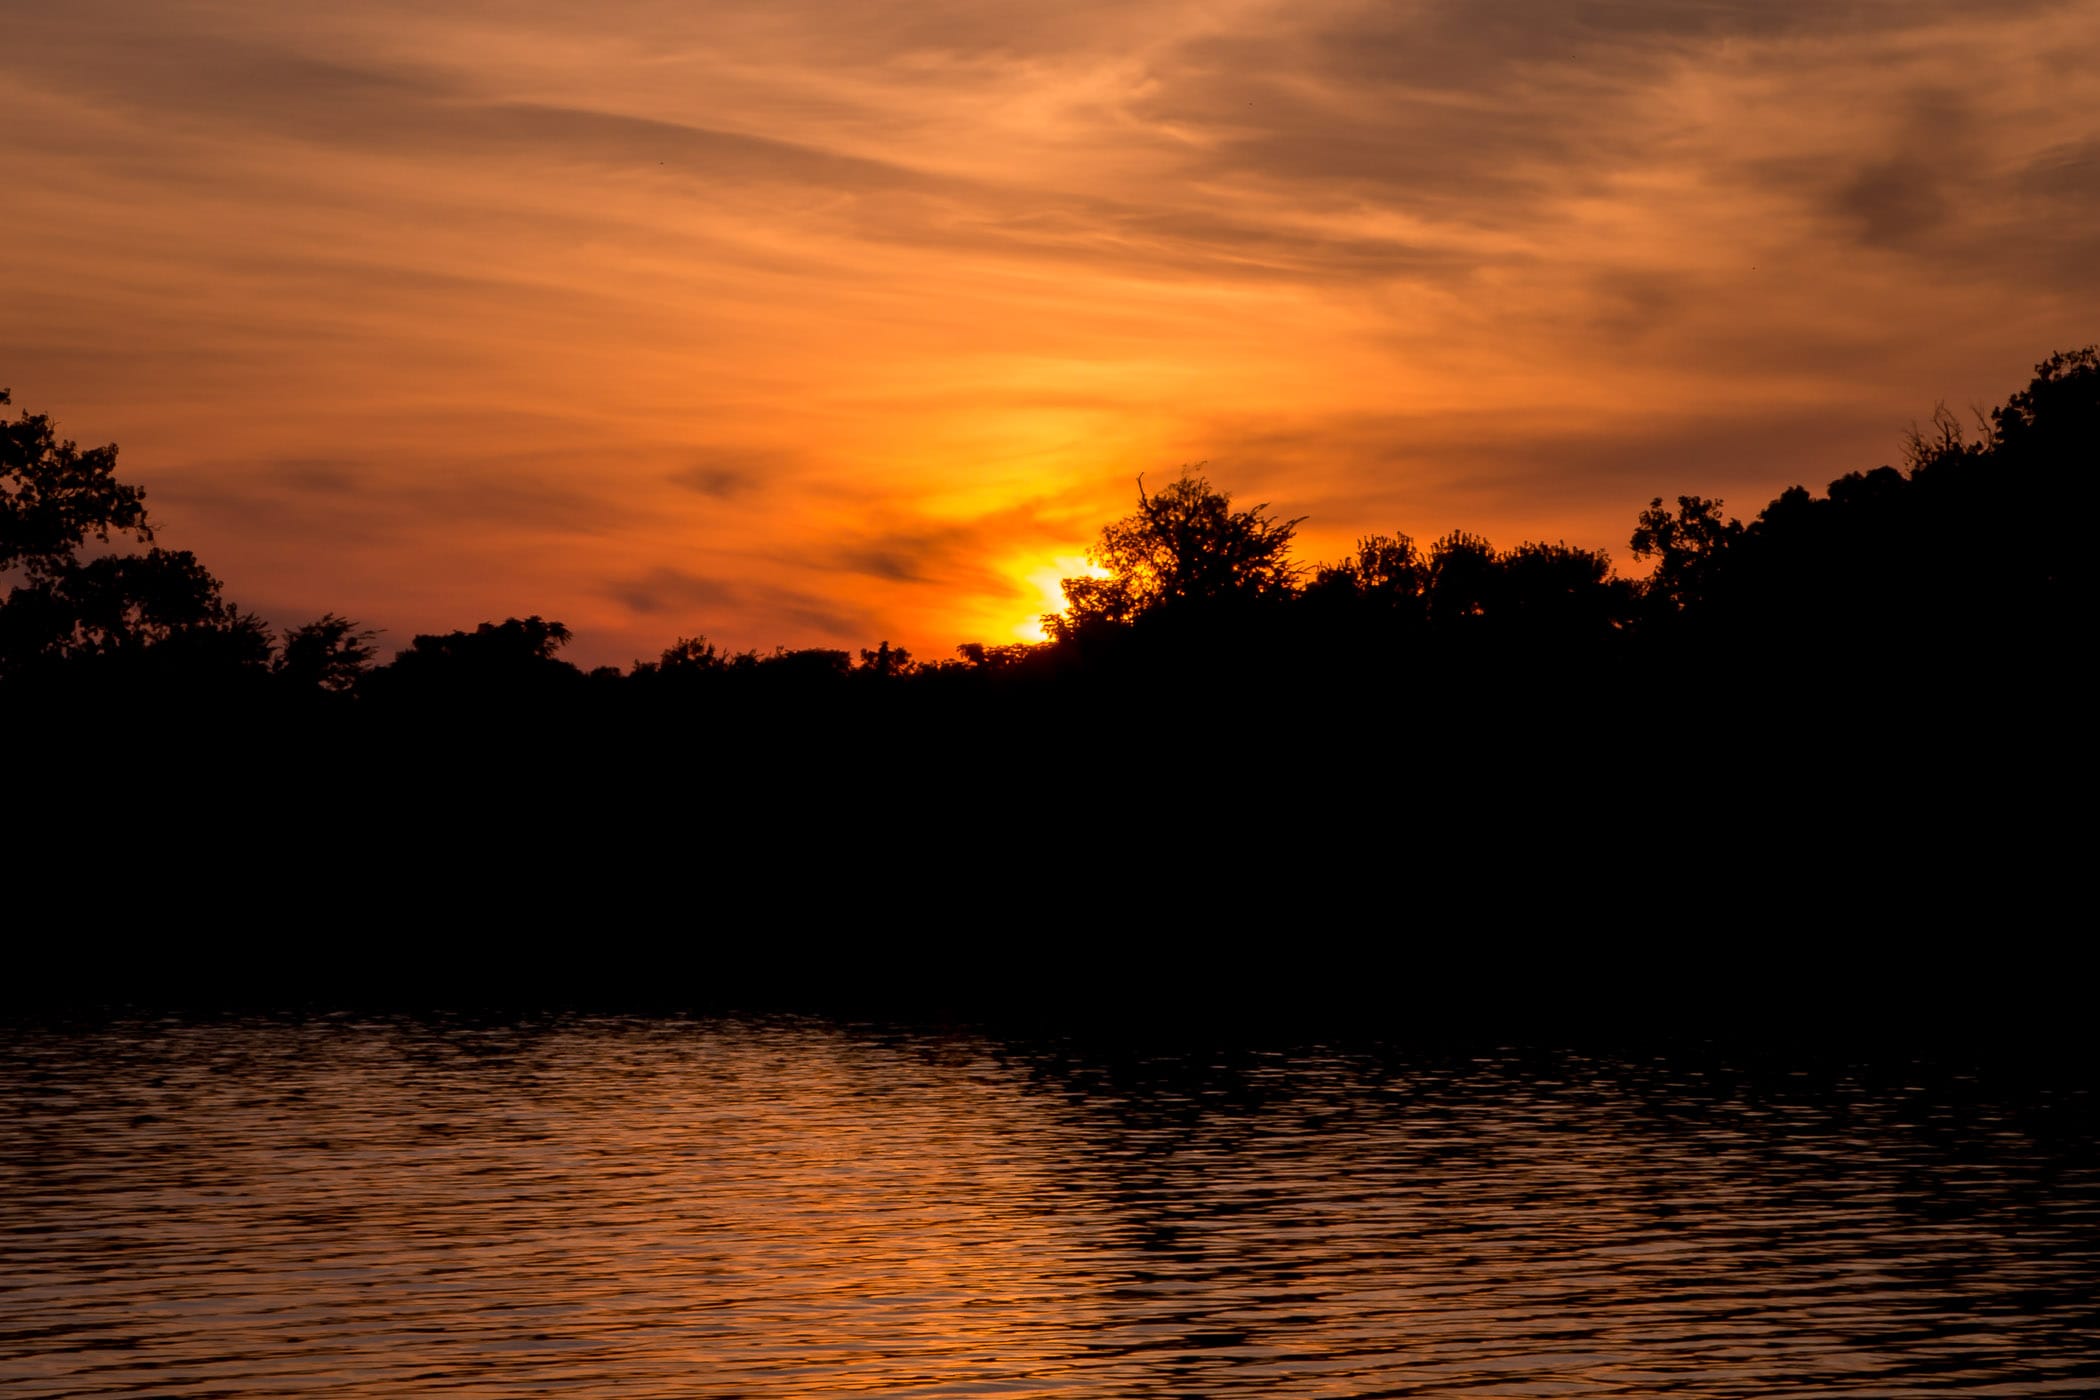 The sun rises on Dallas' White Rock Lake.